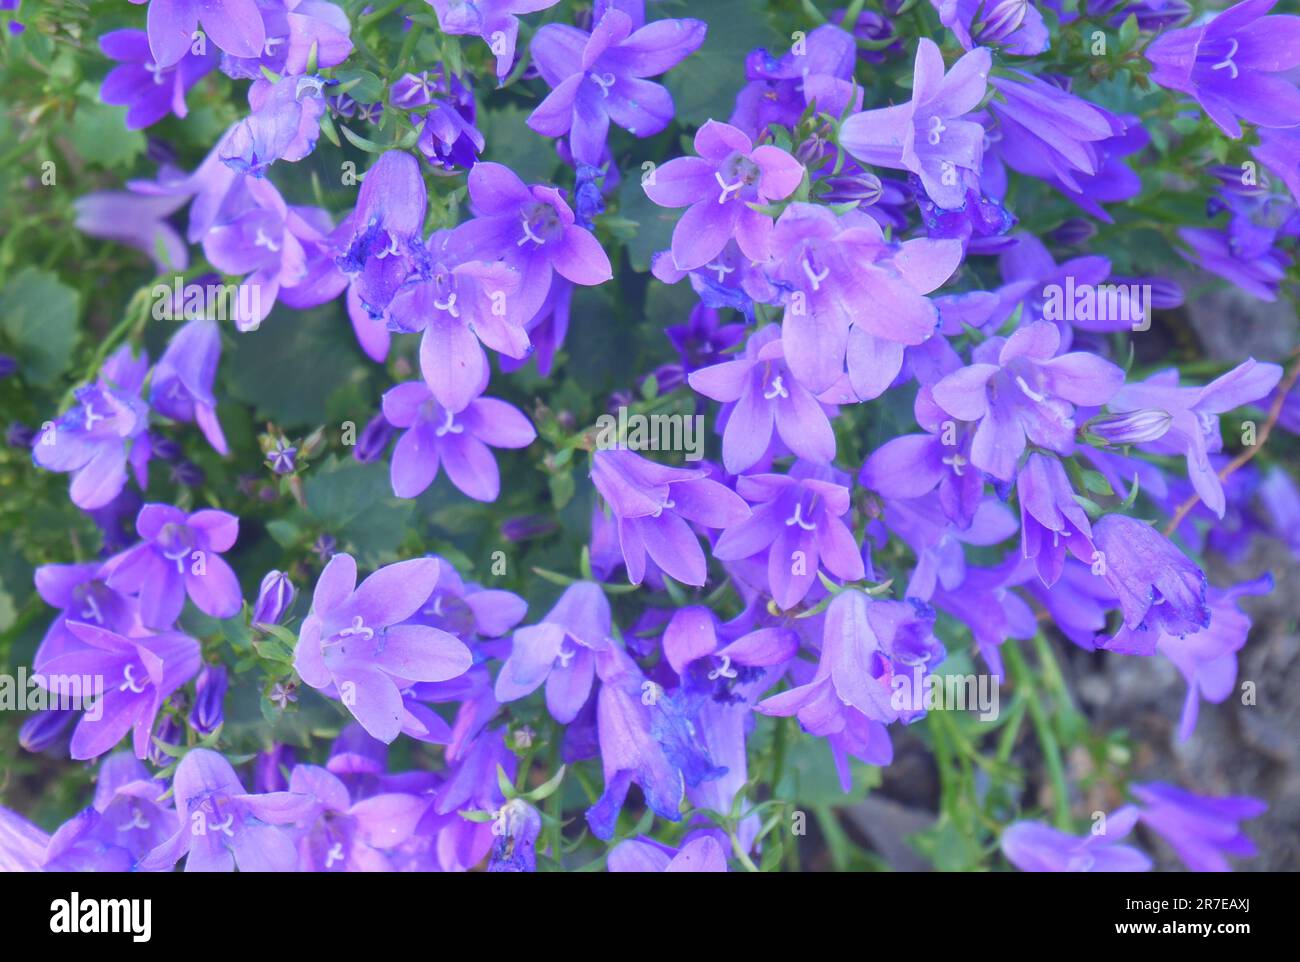 Campanula portenschlagiana tendenza blue, blue bellflower, growing in a garden, Szigethalom, Hungary Stock Photo